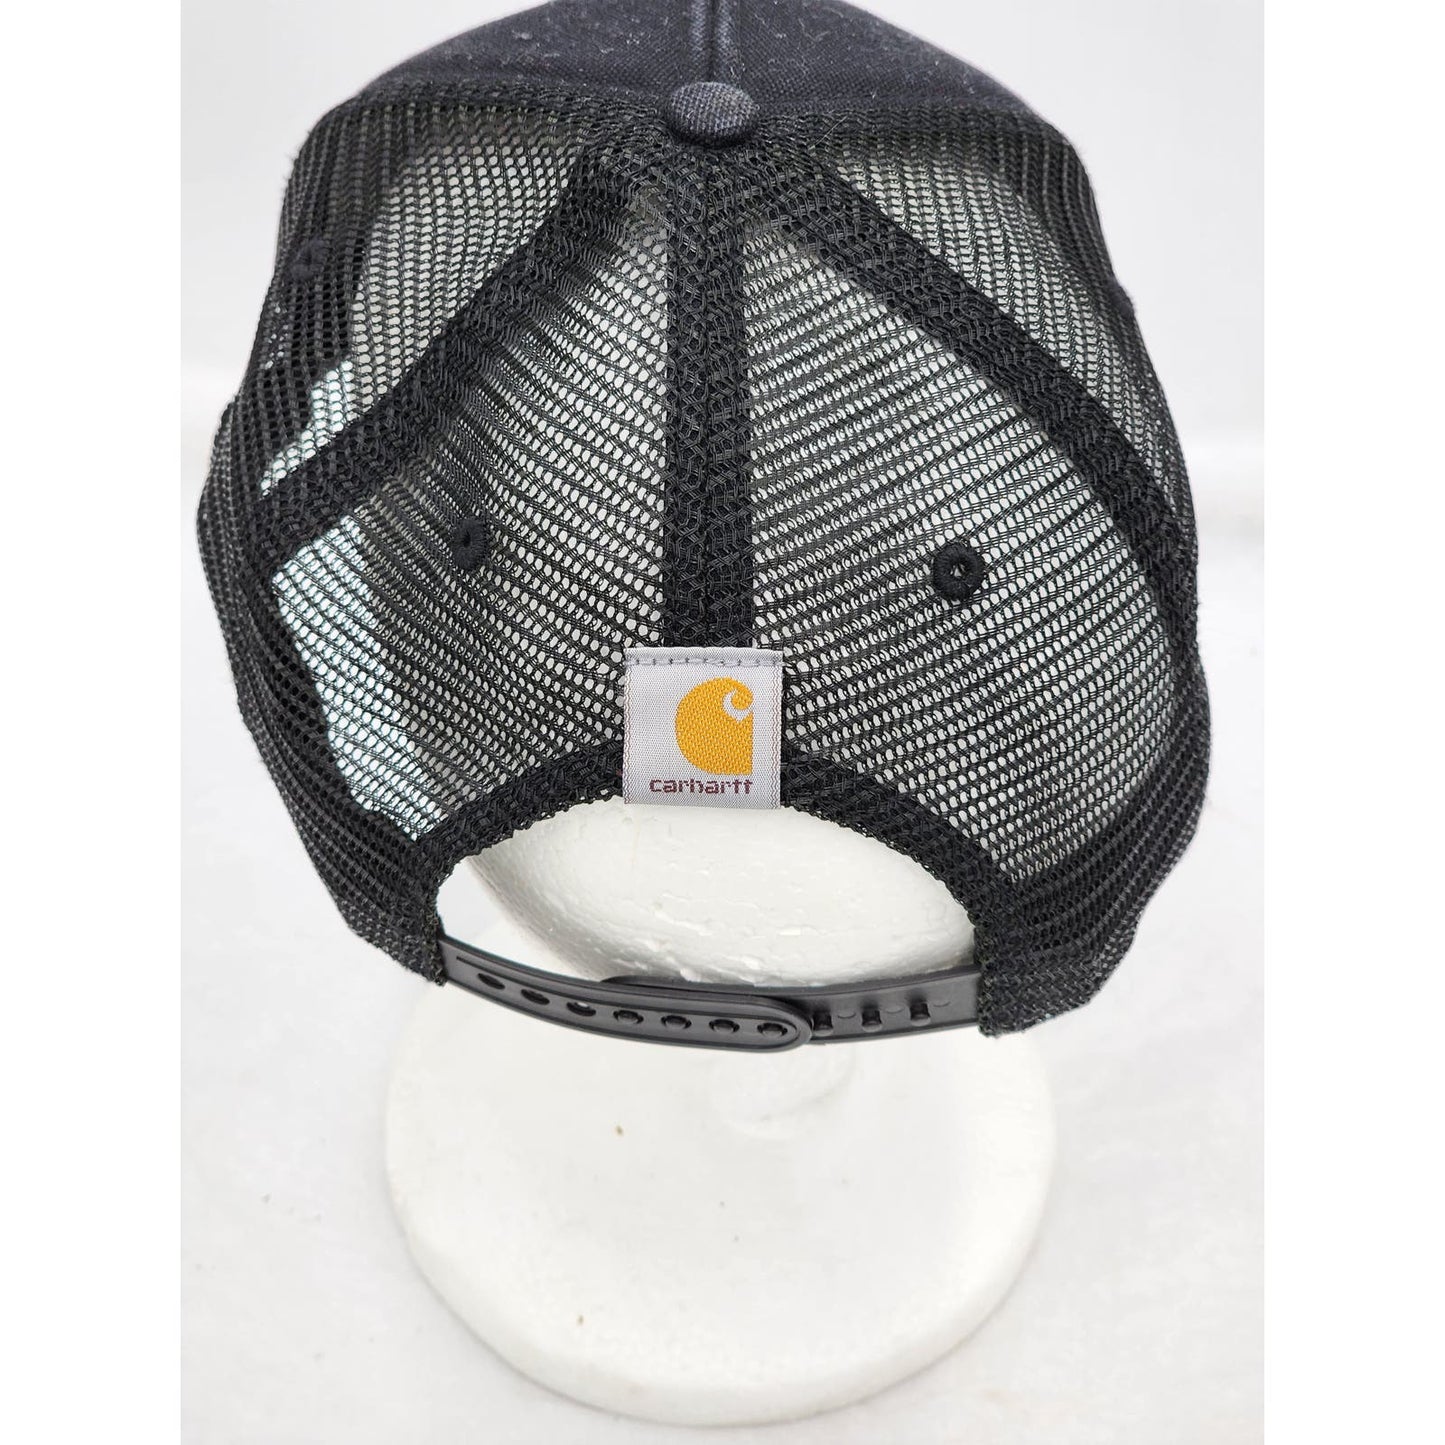 Carhartt Hat Trucker Cap Mesh Back Black Embroidered Logo Headwear Snapback